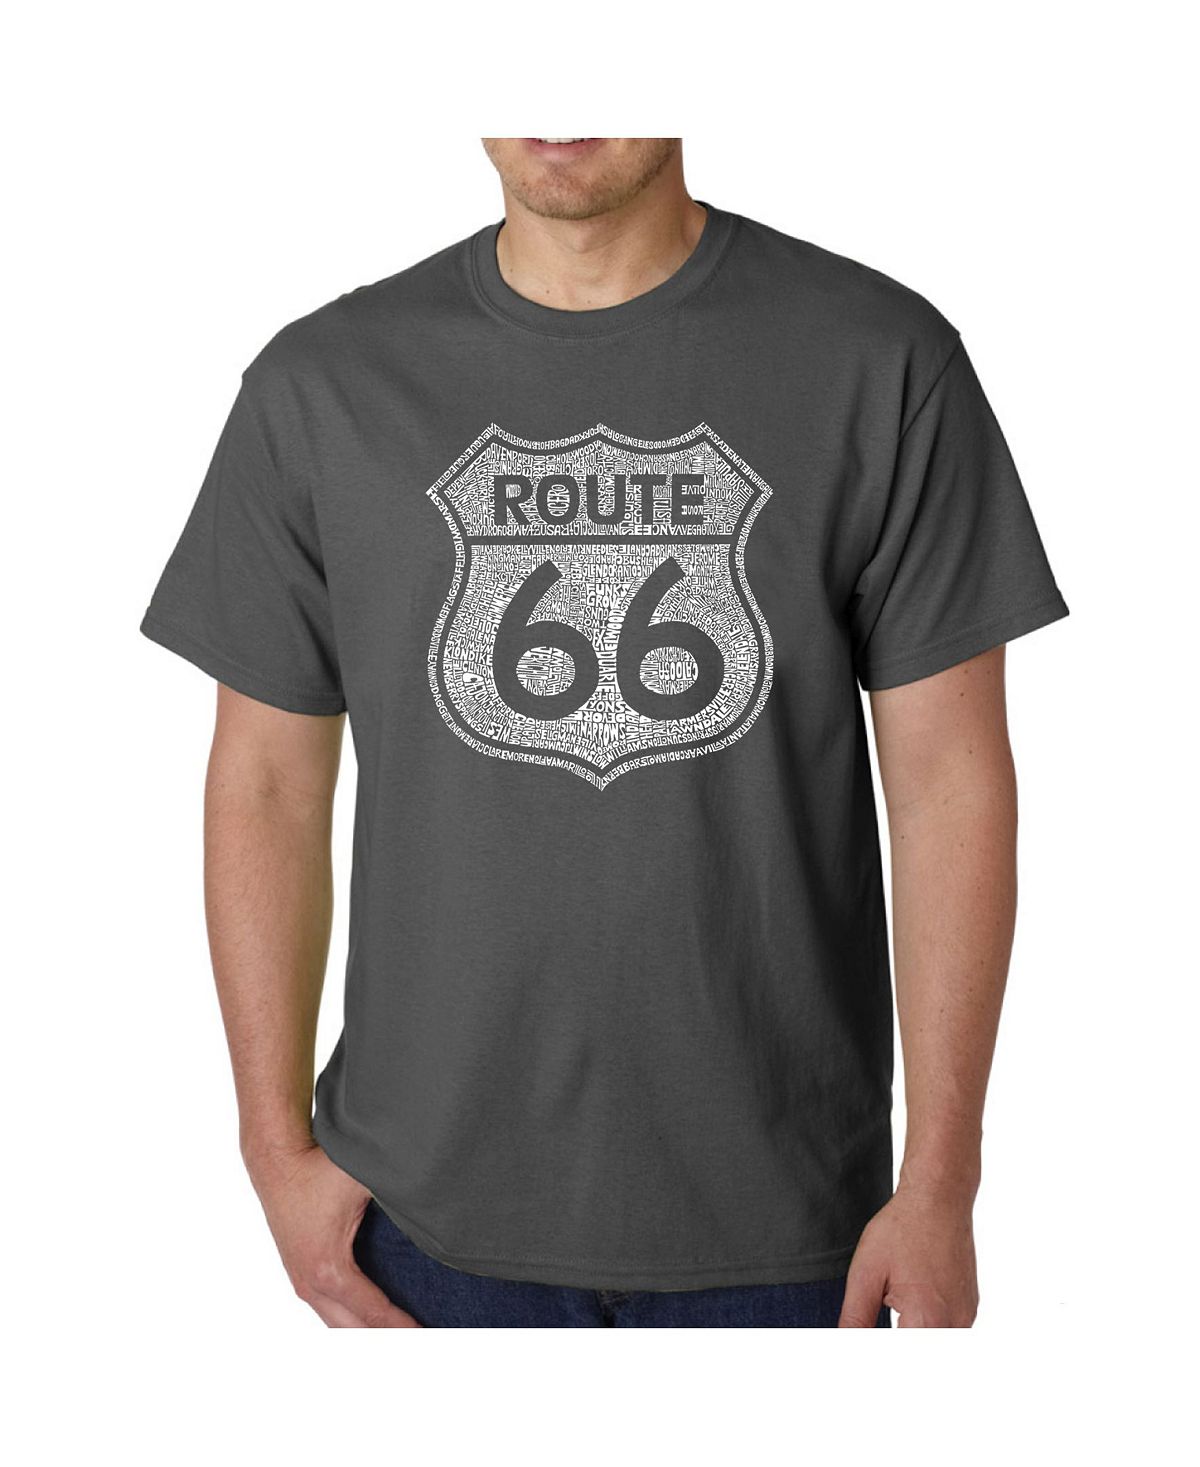 Мужская футболка с рисунком Word Art — Route 66 LA Pop Art